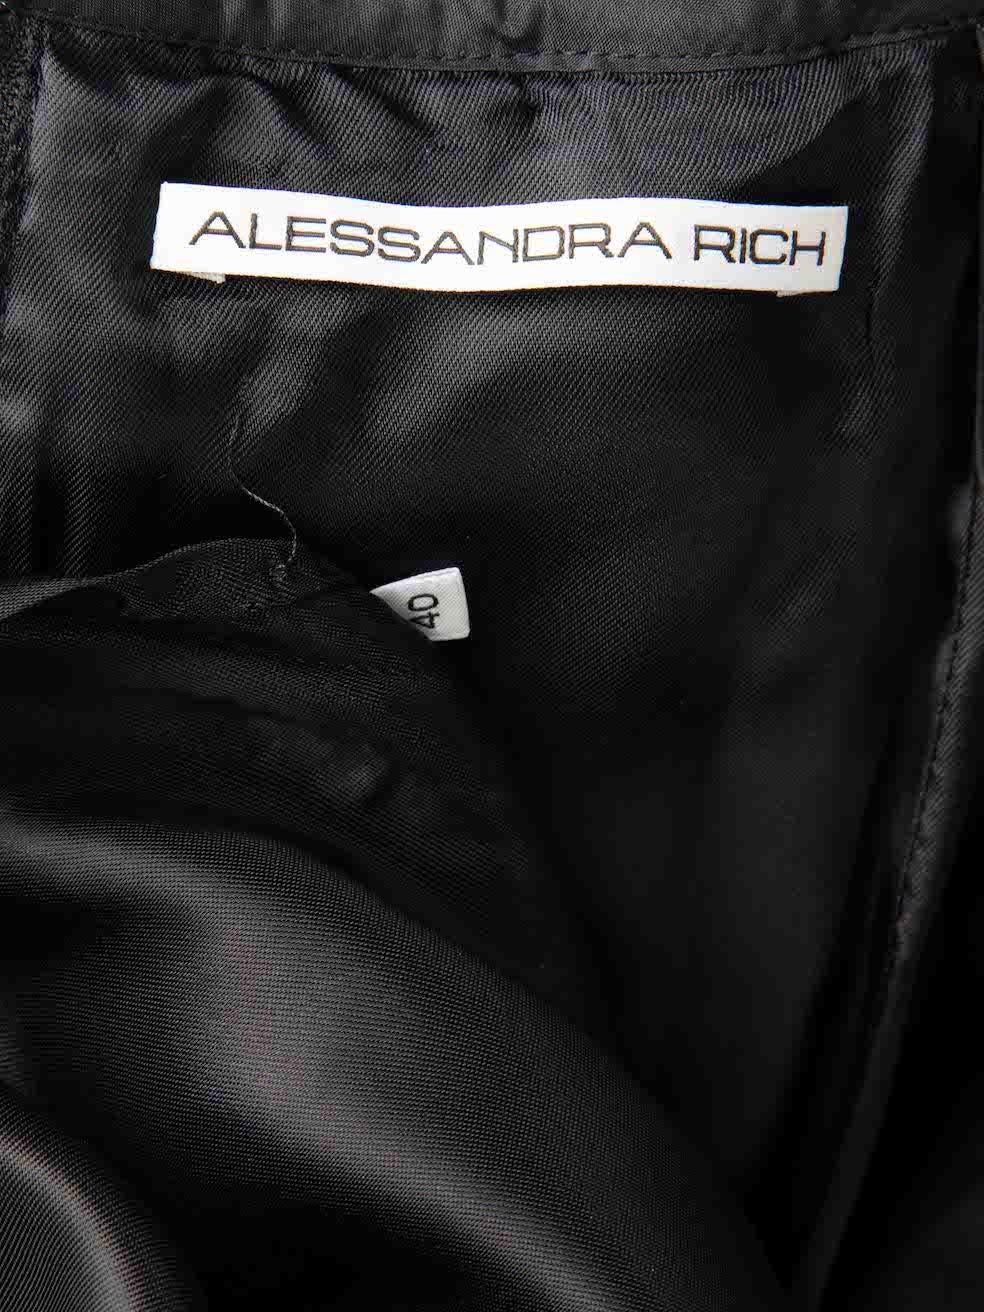 Women's Alessandra Rich Black Pleated Ruffle Trim Dress Size S